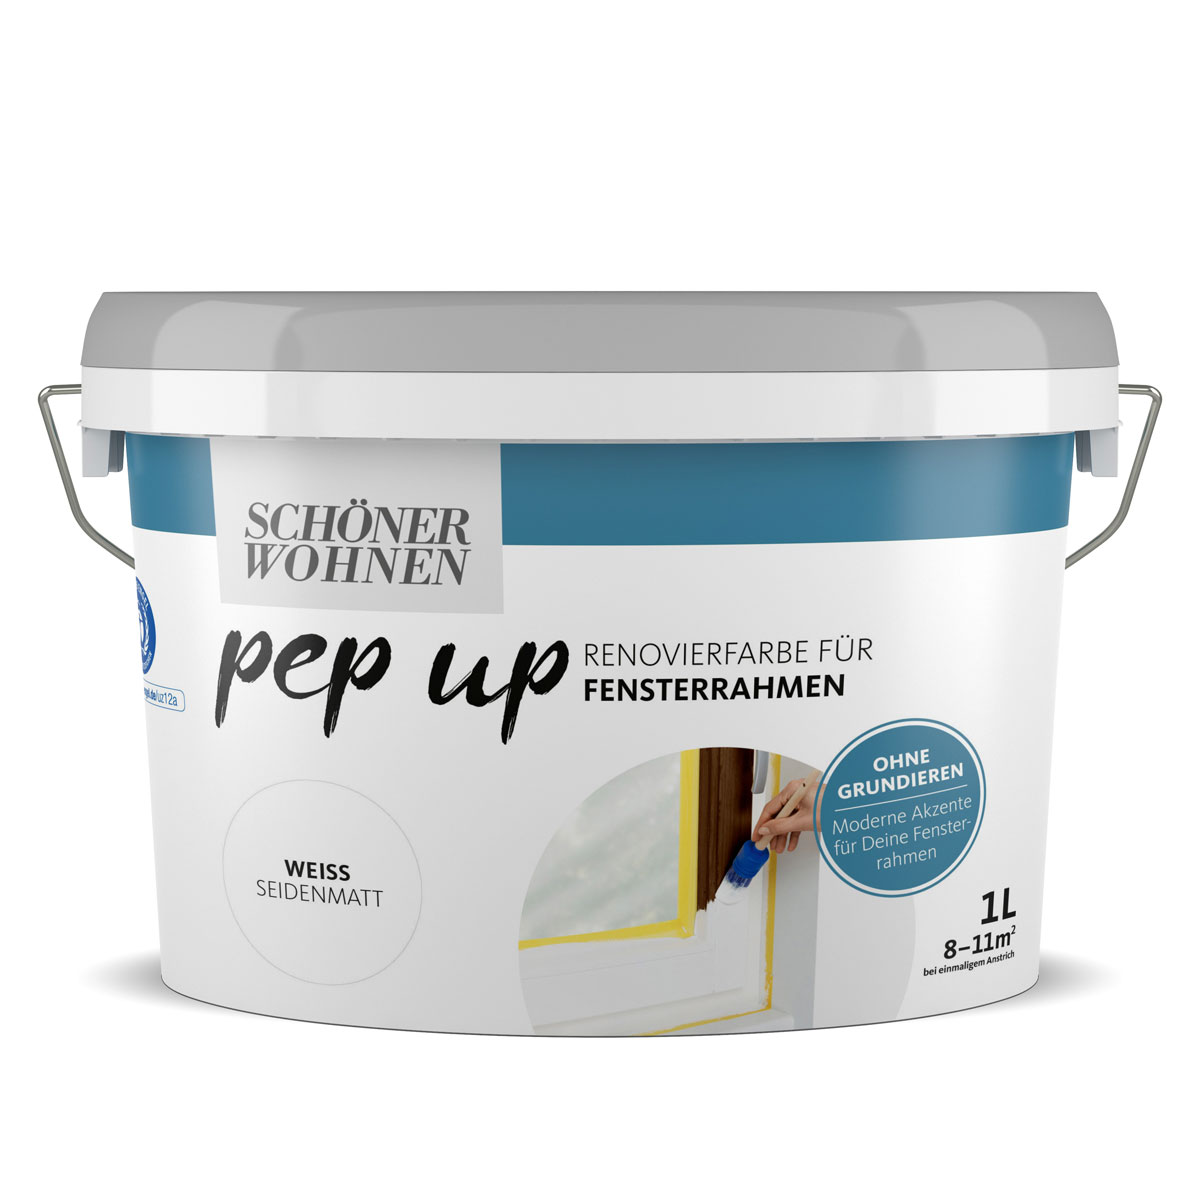 „pep up“ Fensterrahmen, weiß, seidenmatt, 1 L